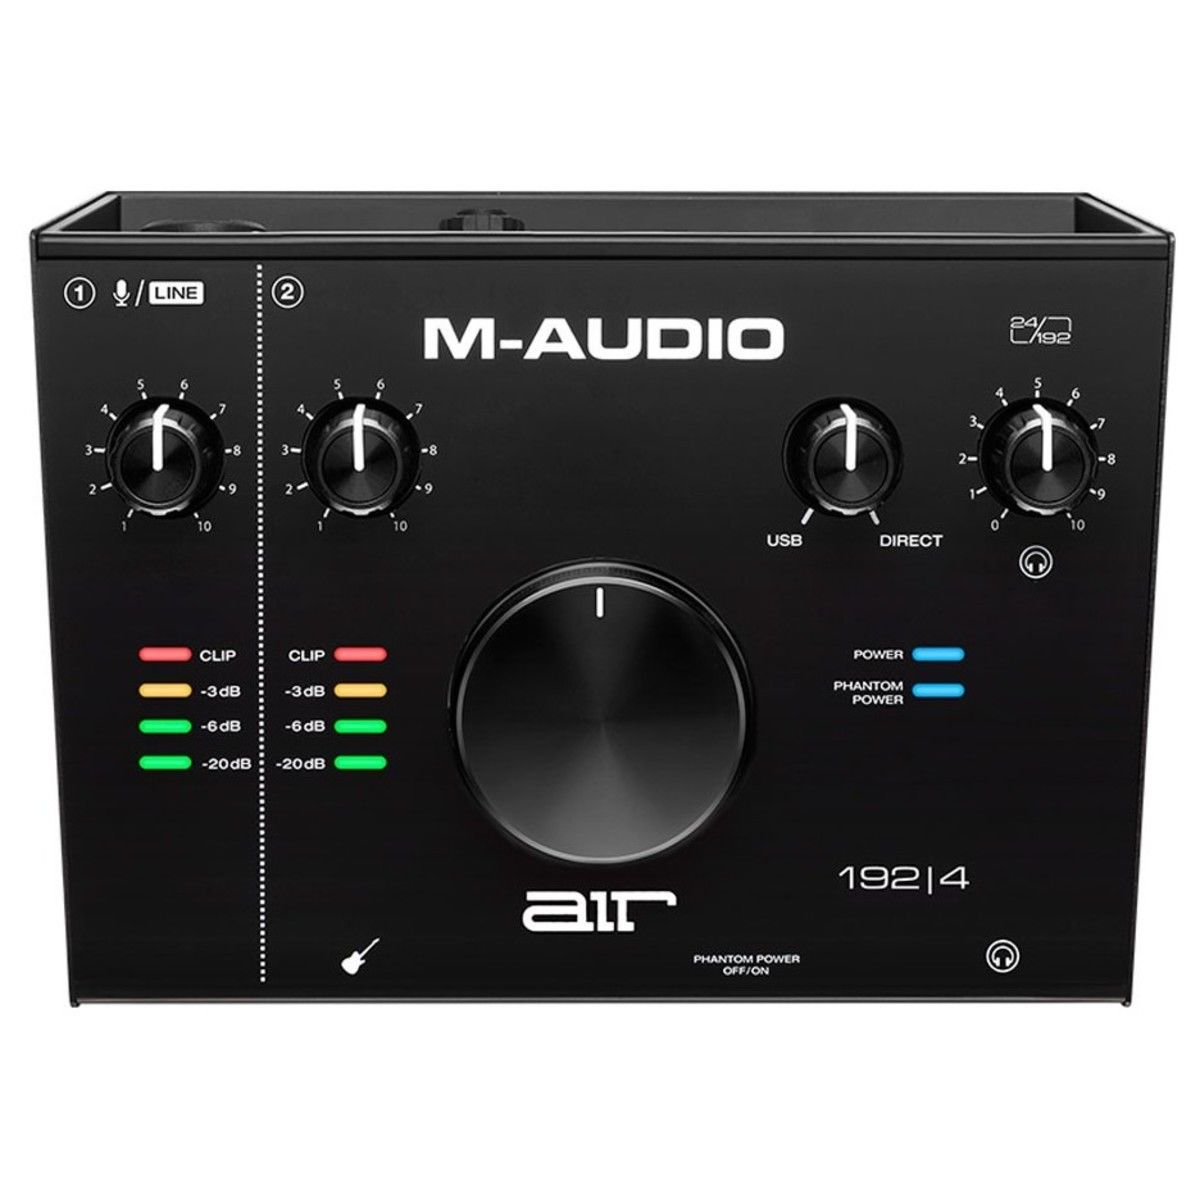  USB  M-audio Air 192 | 4